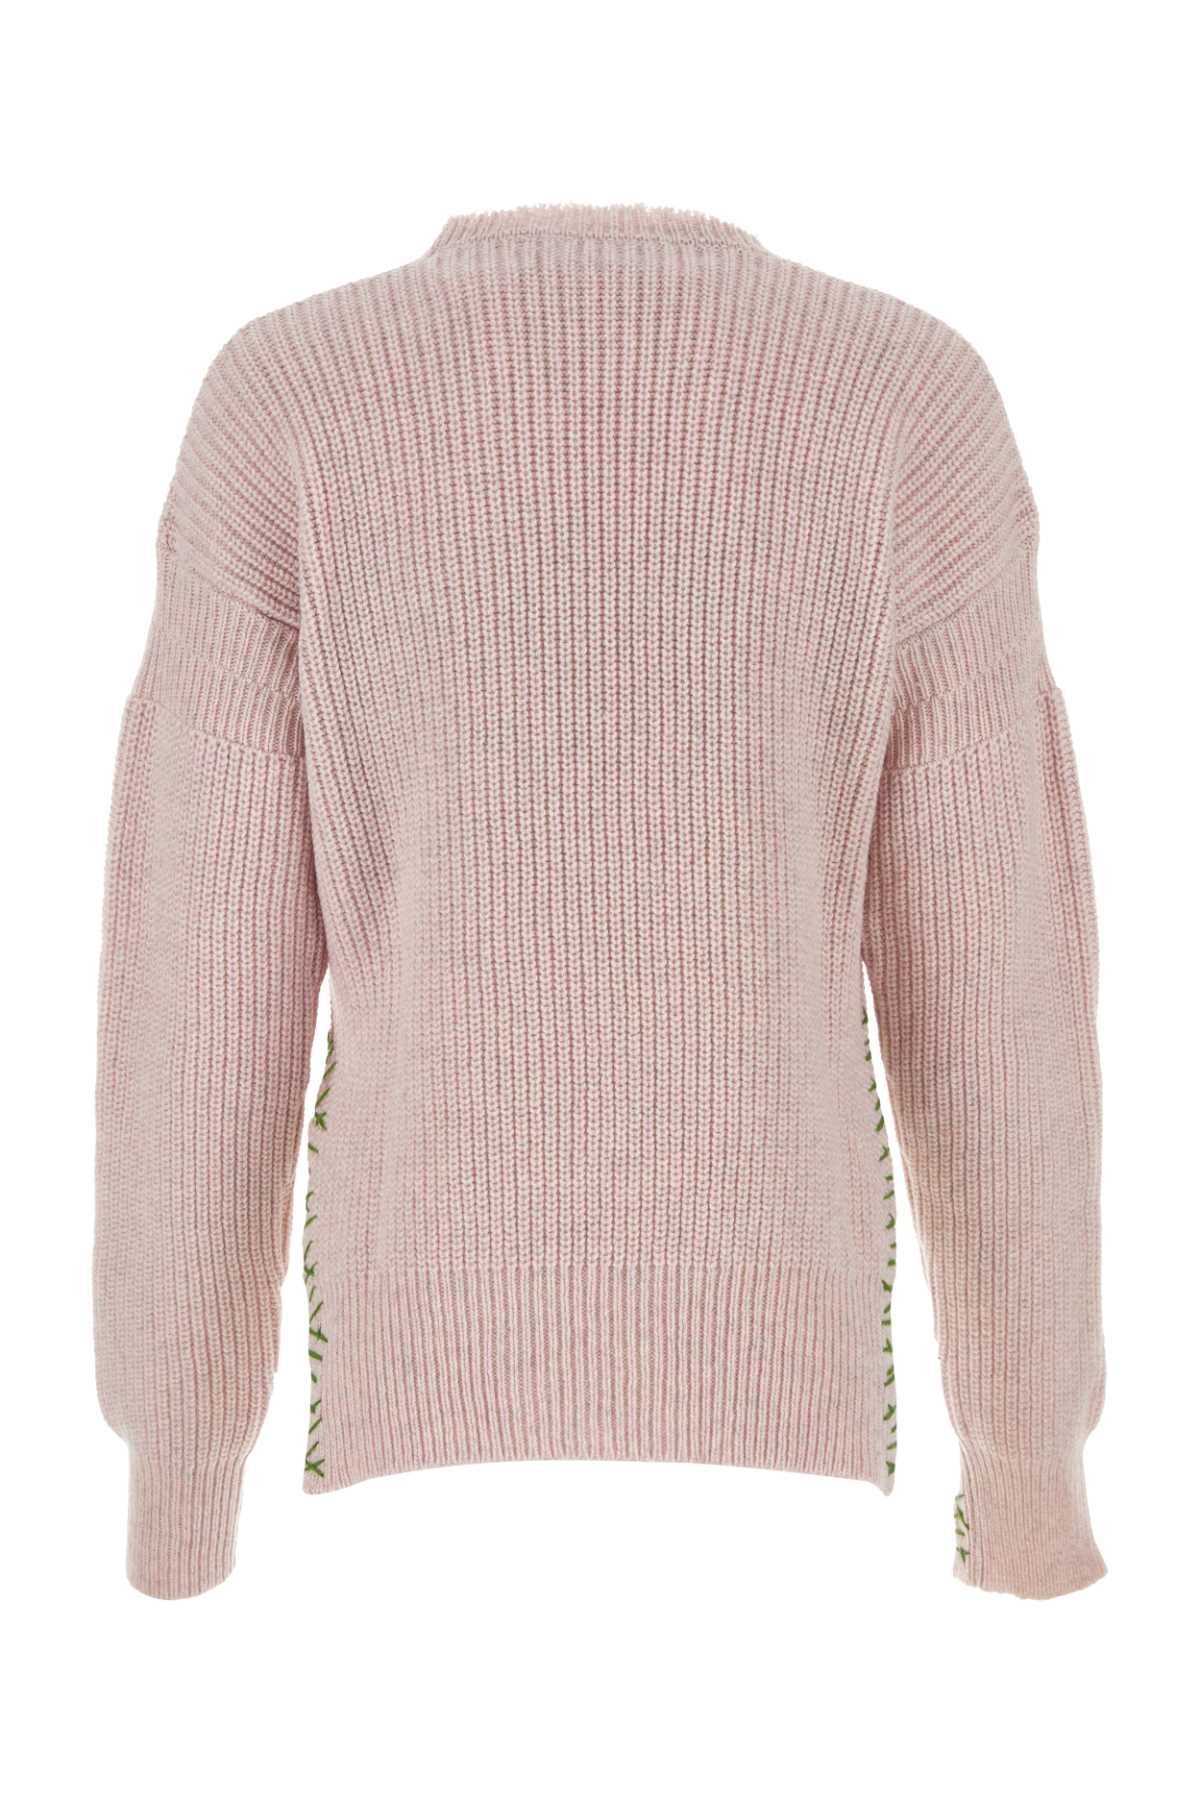 Marni Pastel Pink Wool Sweater In Azalea